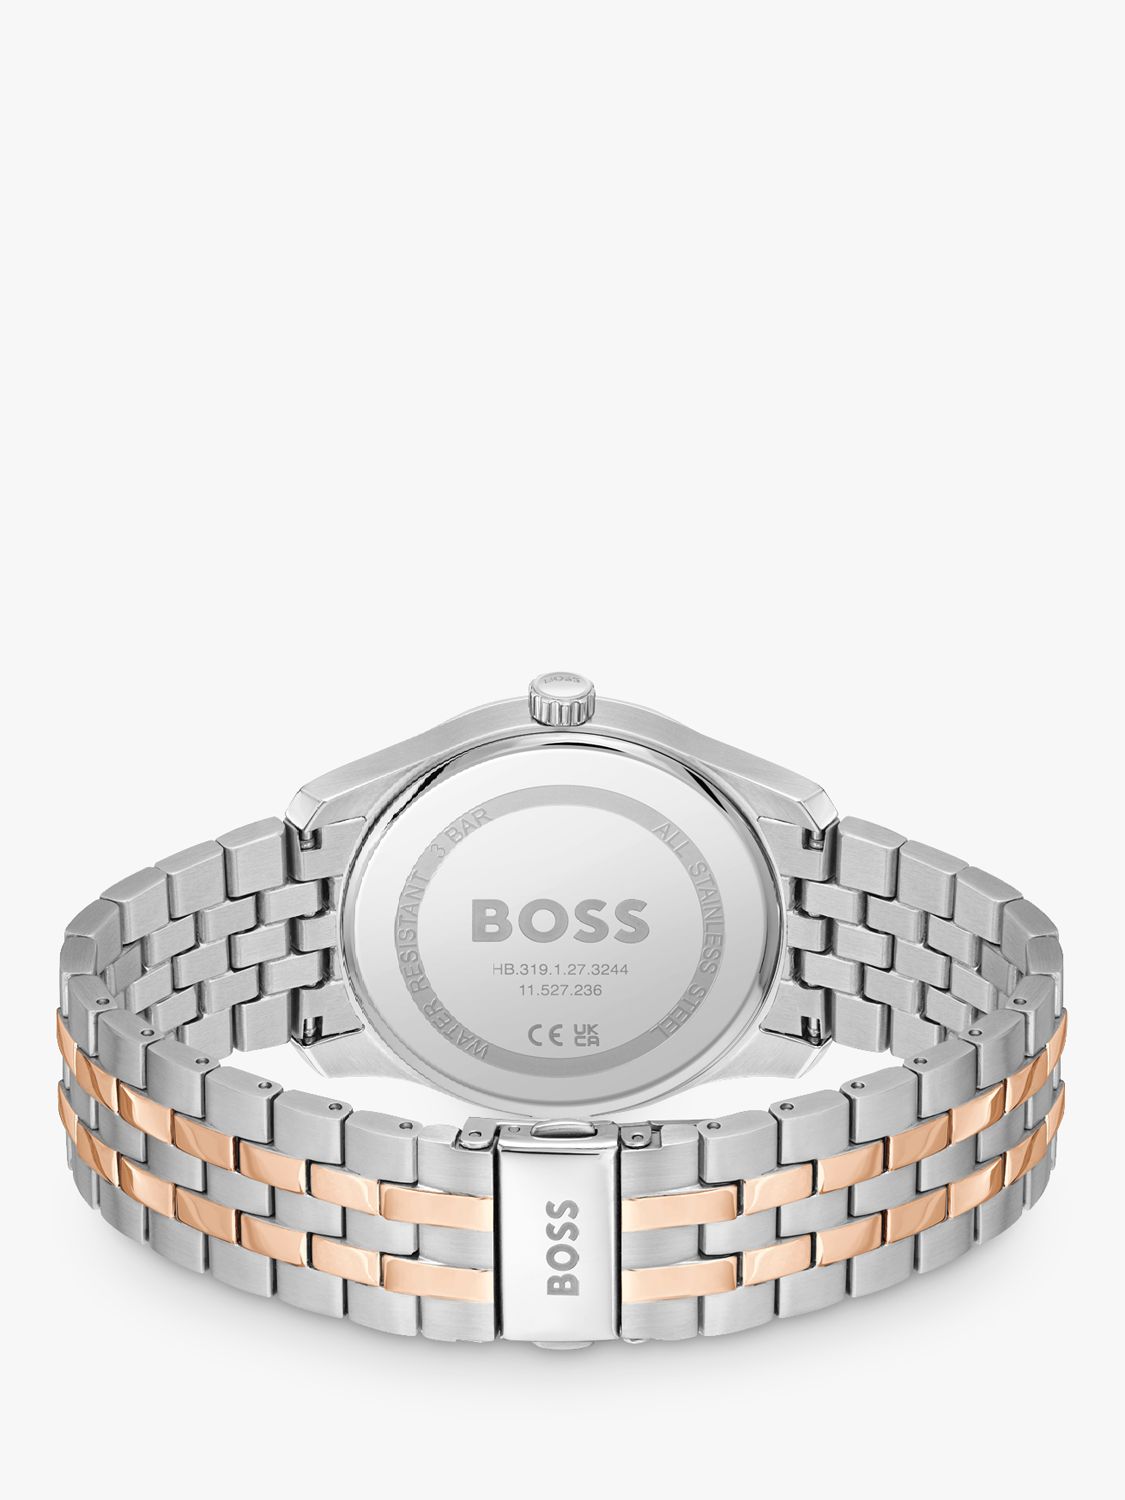 Buy BOSS 1514135 Men's Principle Bracelet Strap Watch, Silver/Gold Online at johnlewis.com